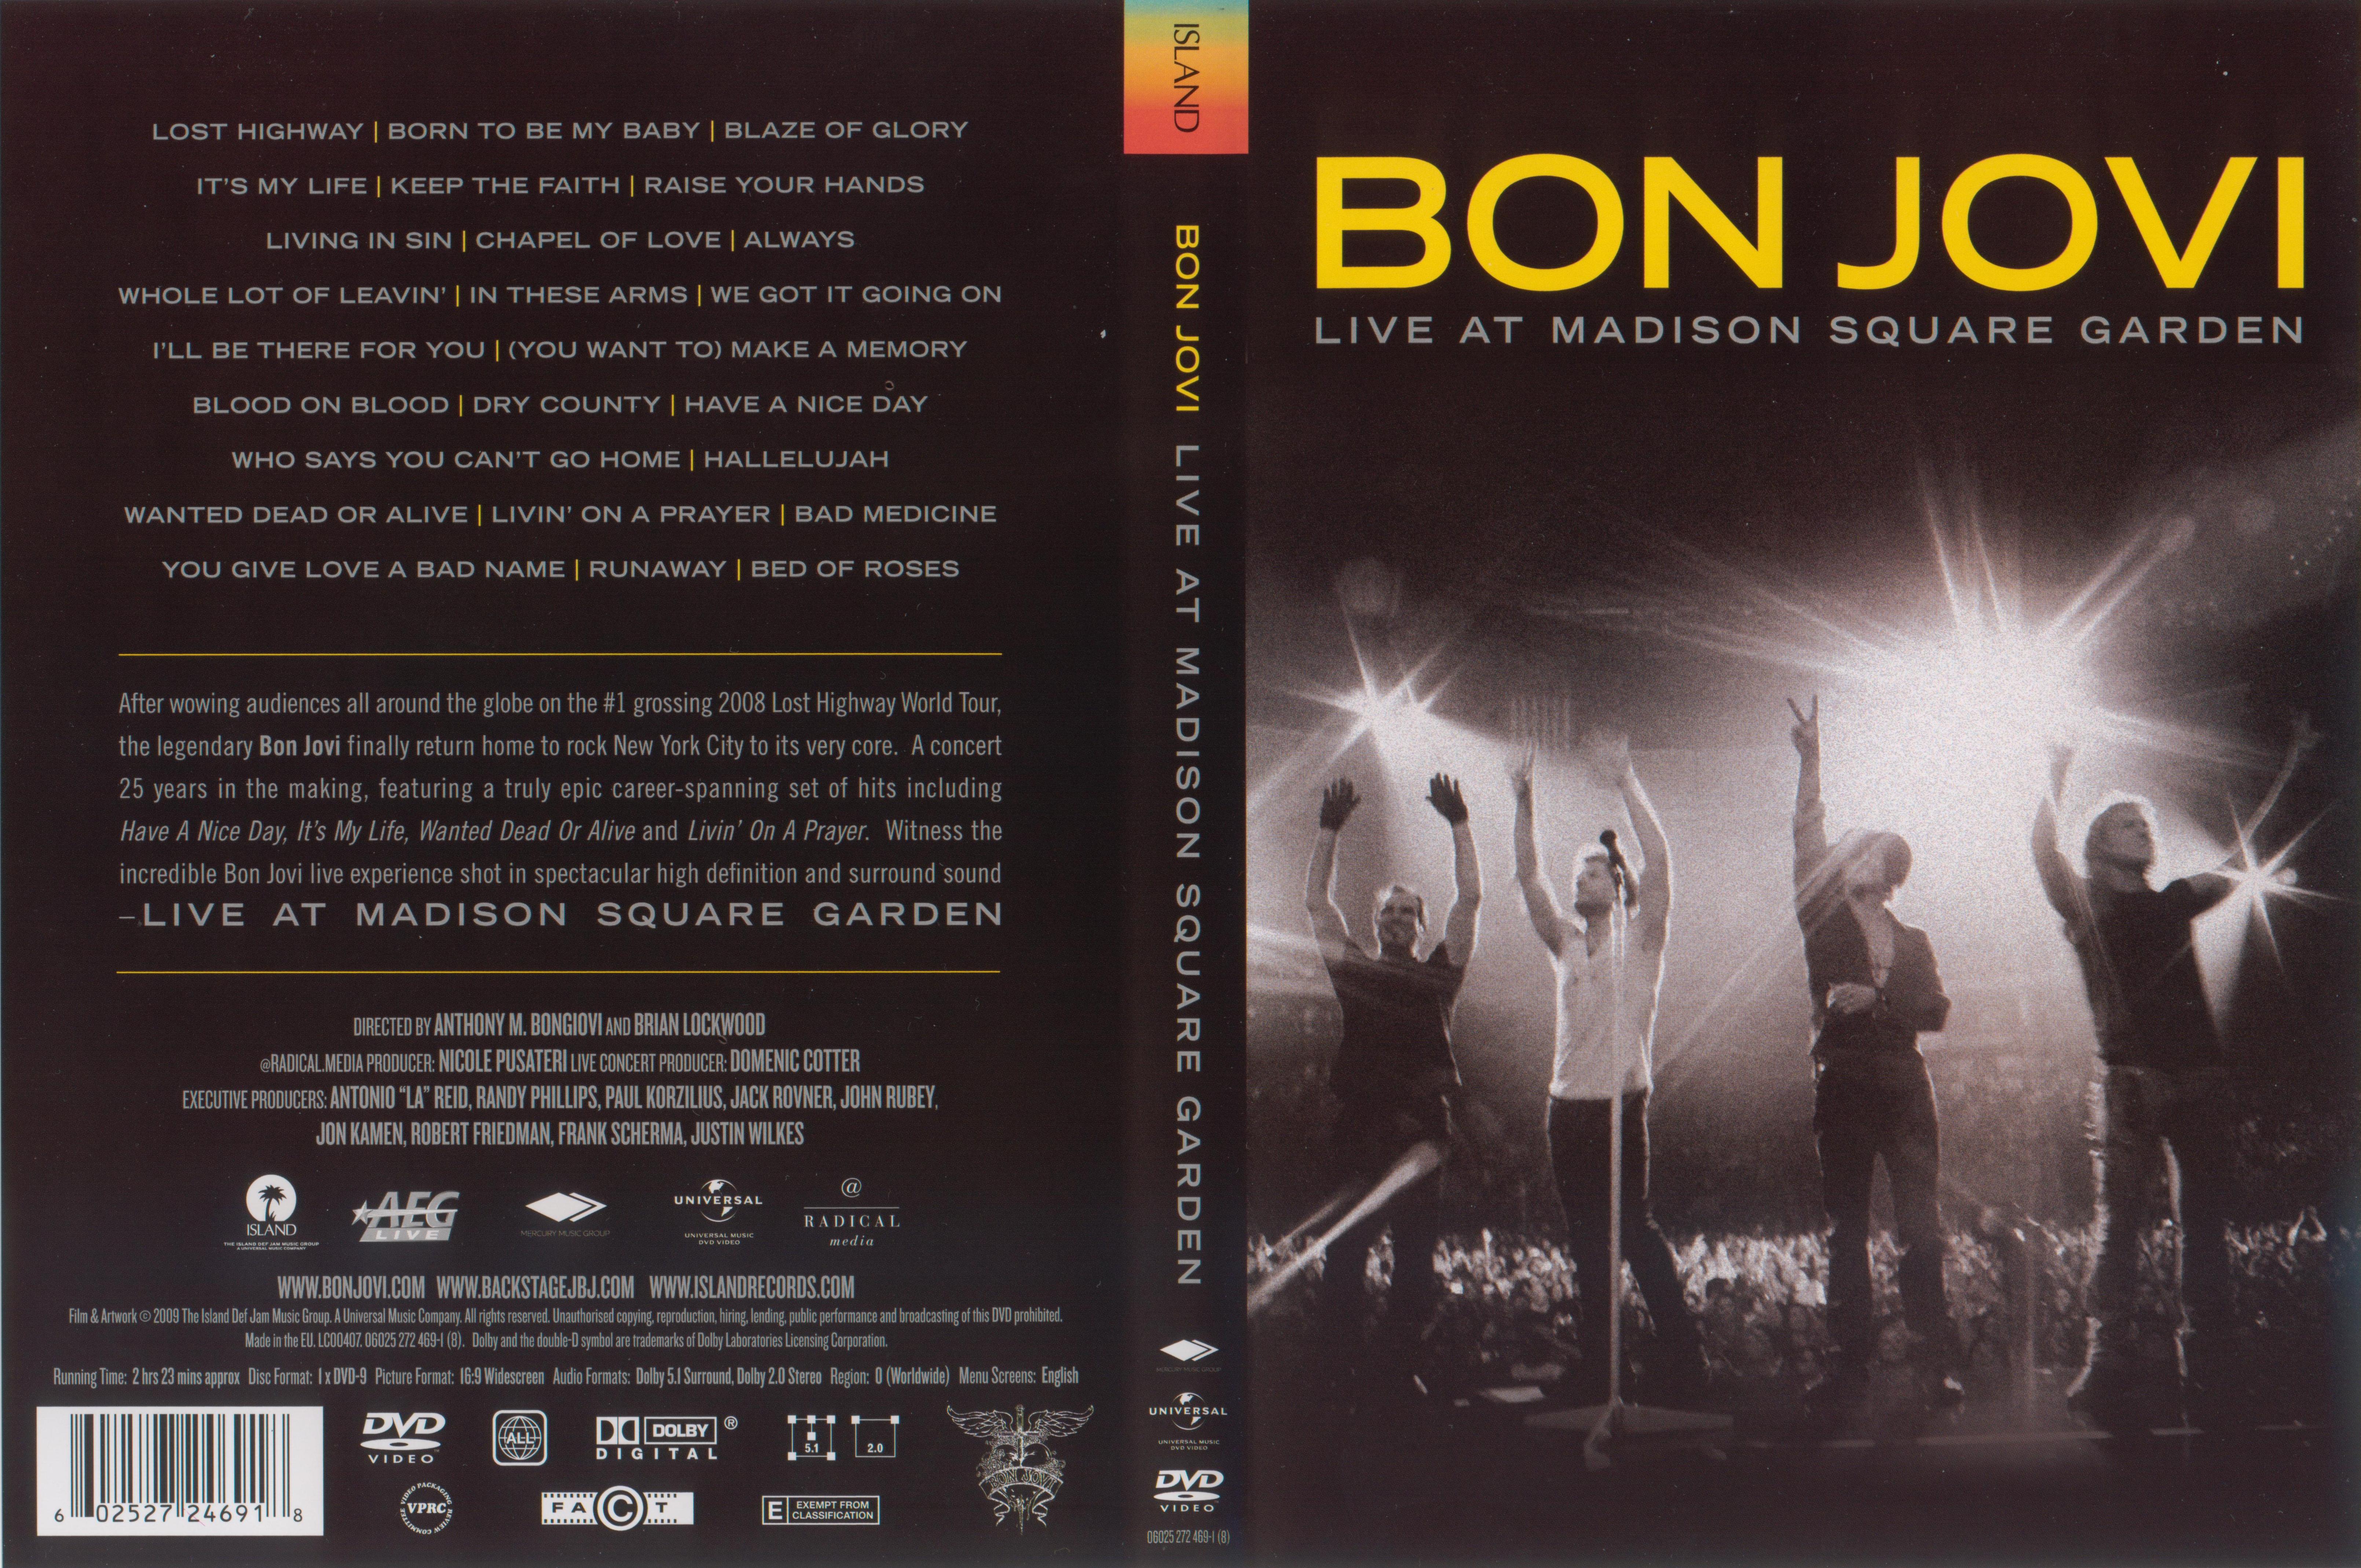 Jaquette DVD Bon Jovi - Live at Madison Square Garden